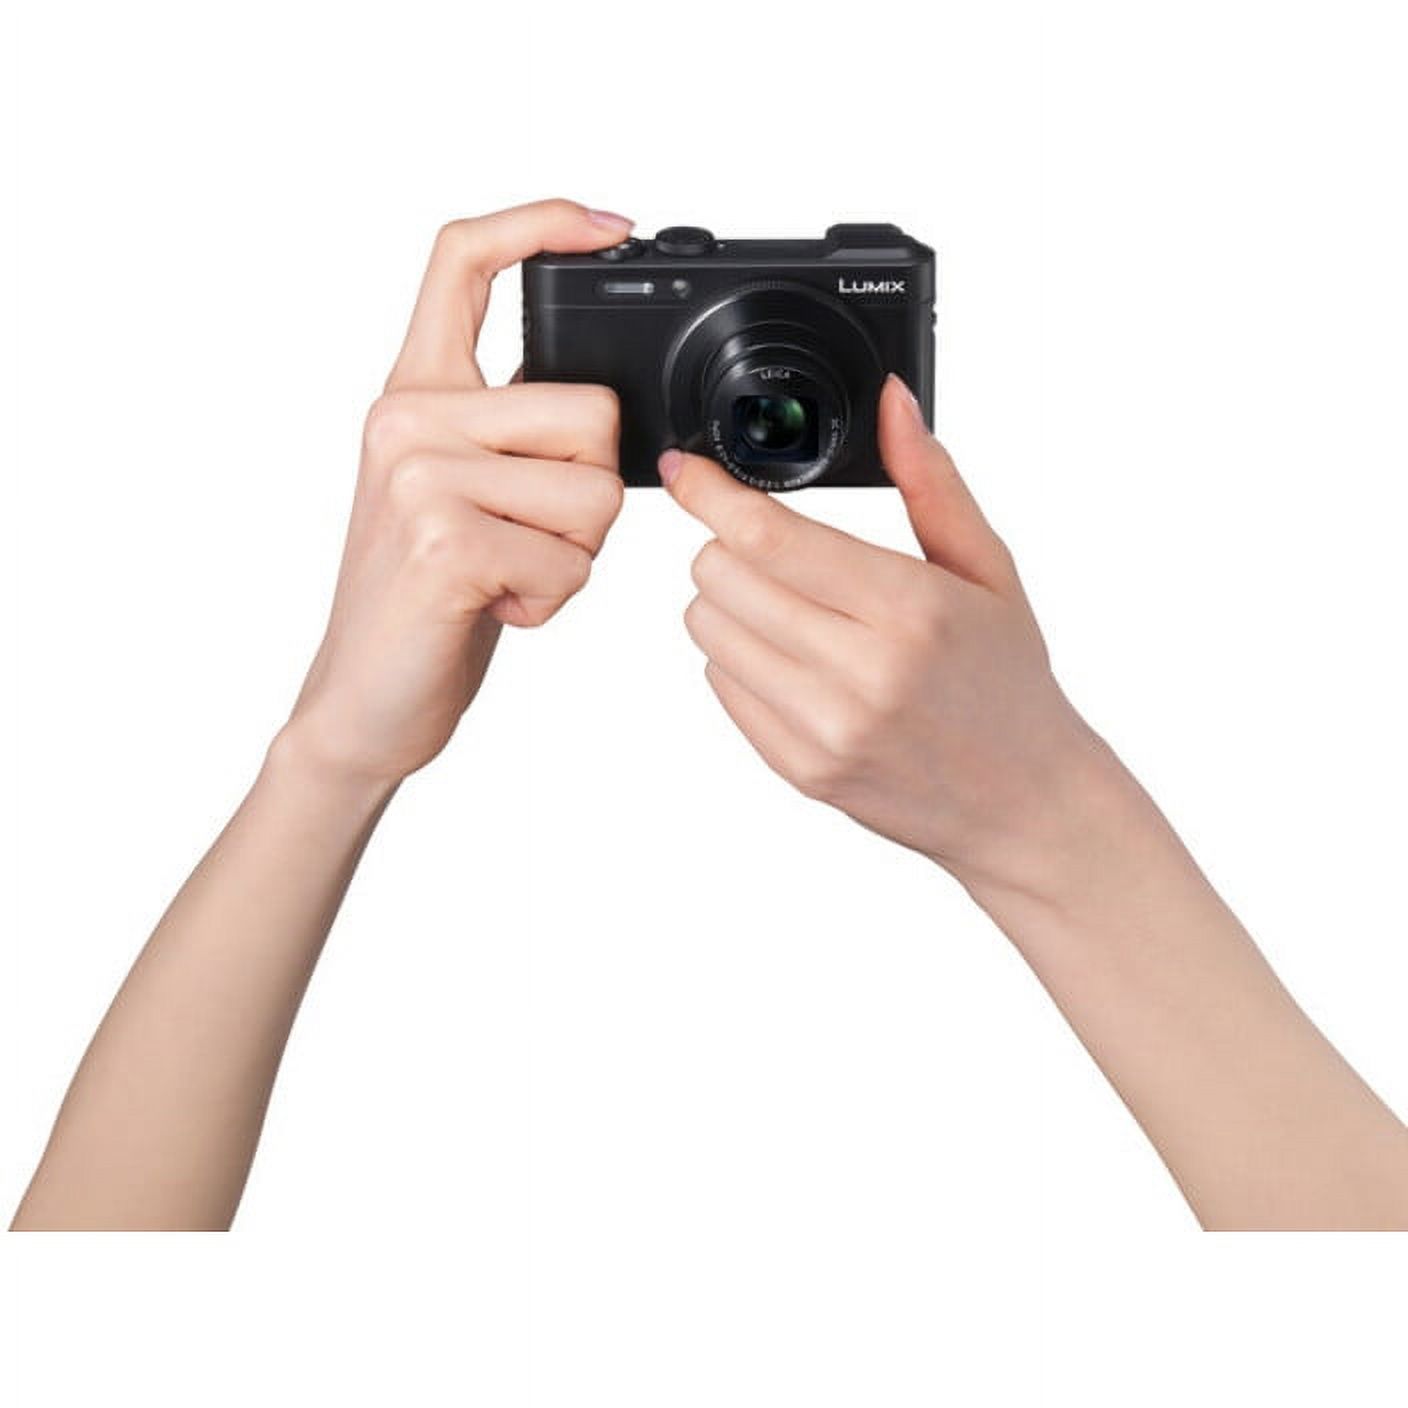 Panasonic Lumix DMC-LF1 12.1 Megapixel Bridge Camera, Black - image 3 of 5